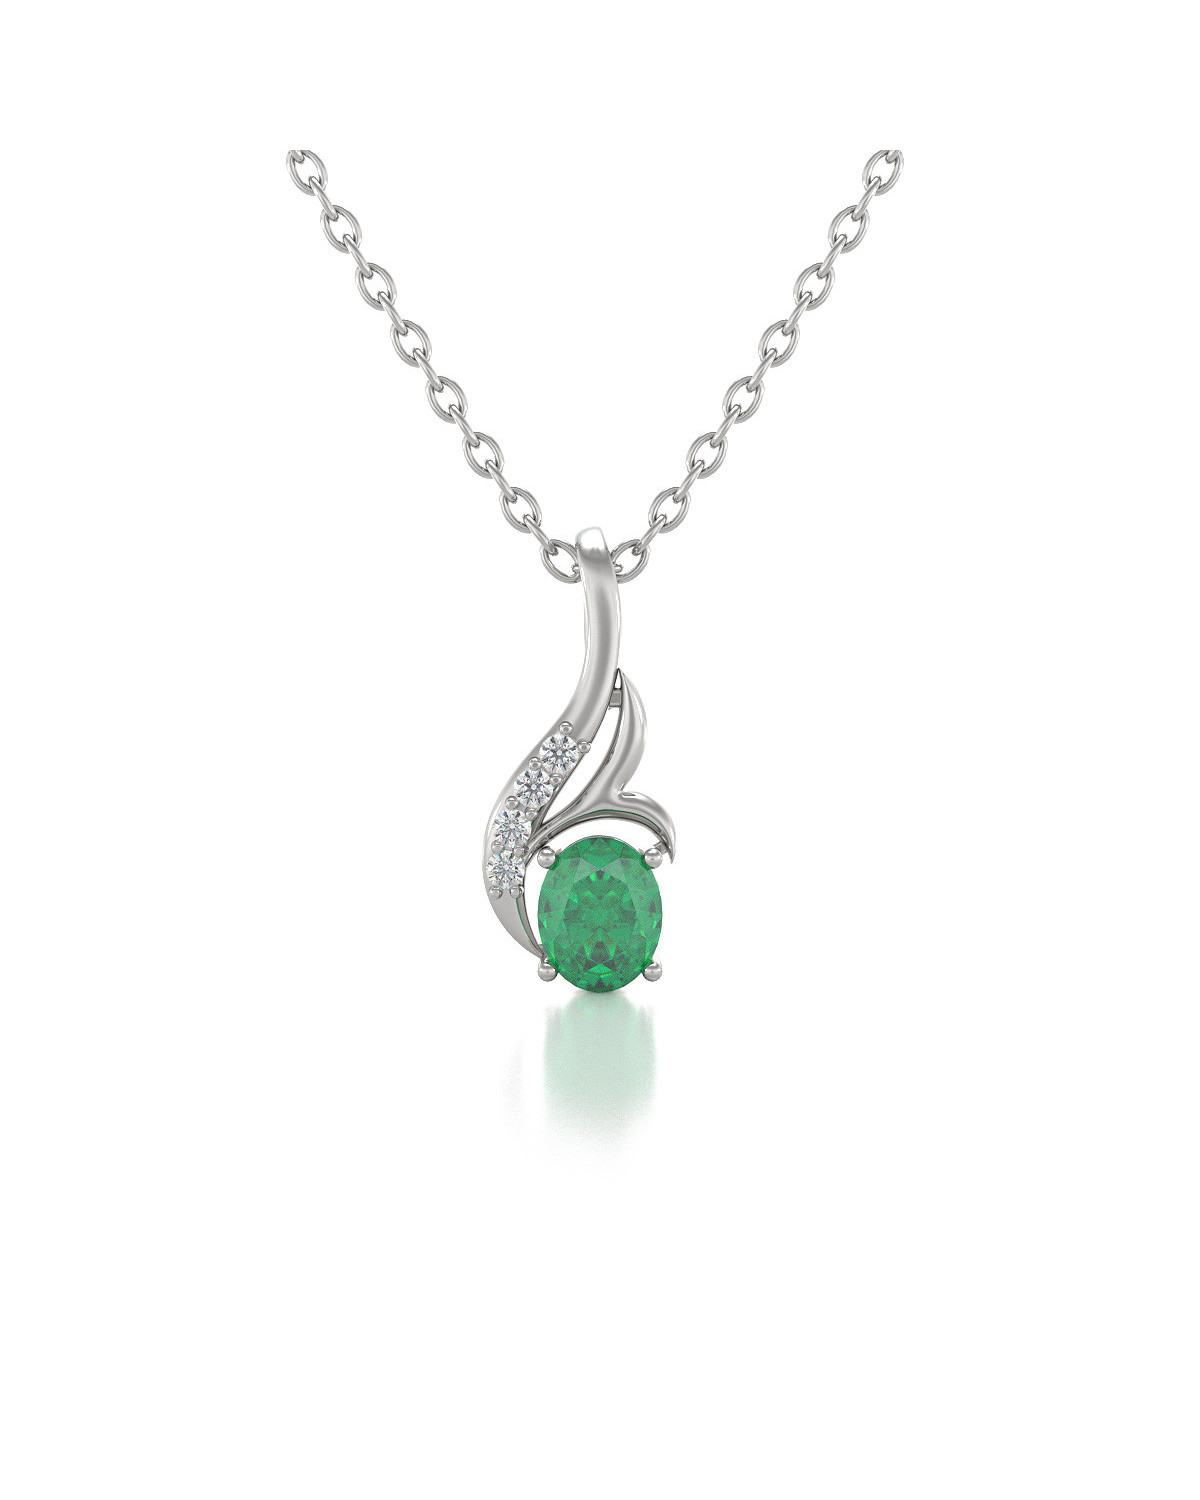 925 Silber Smaragd Diamanten Halsketten Anhanger Silberkette enthalten ADEN - 1